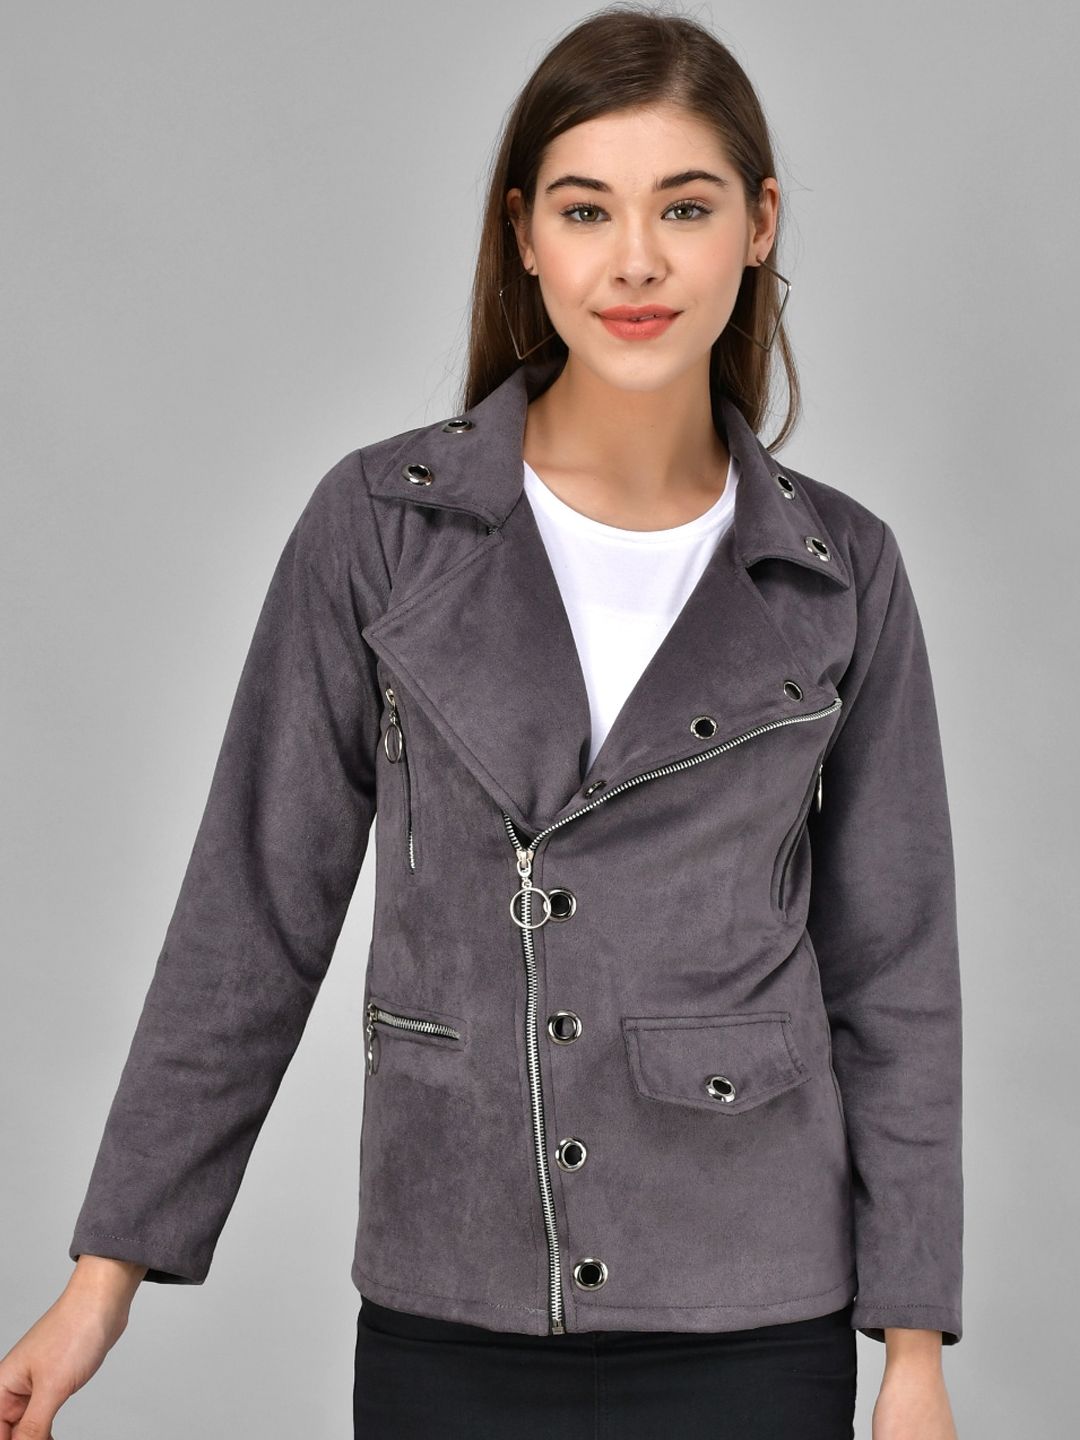 Darzi Women Grey Tailored Jacket Price in India